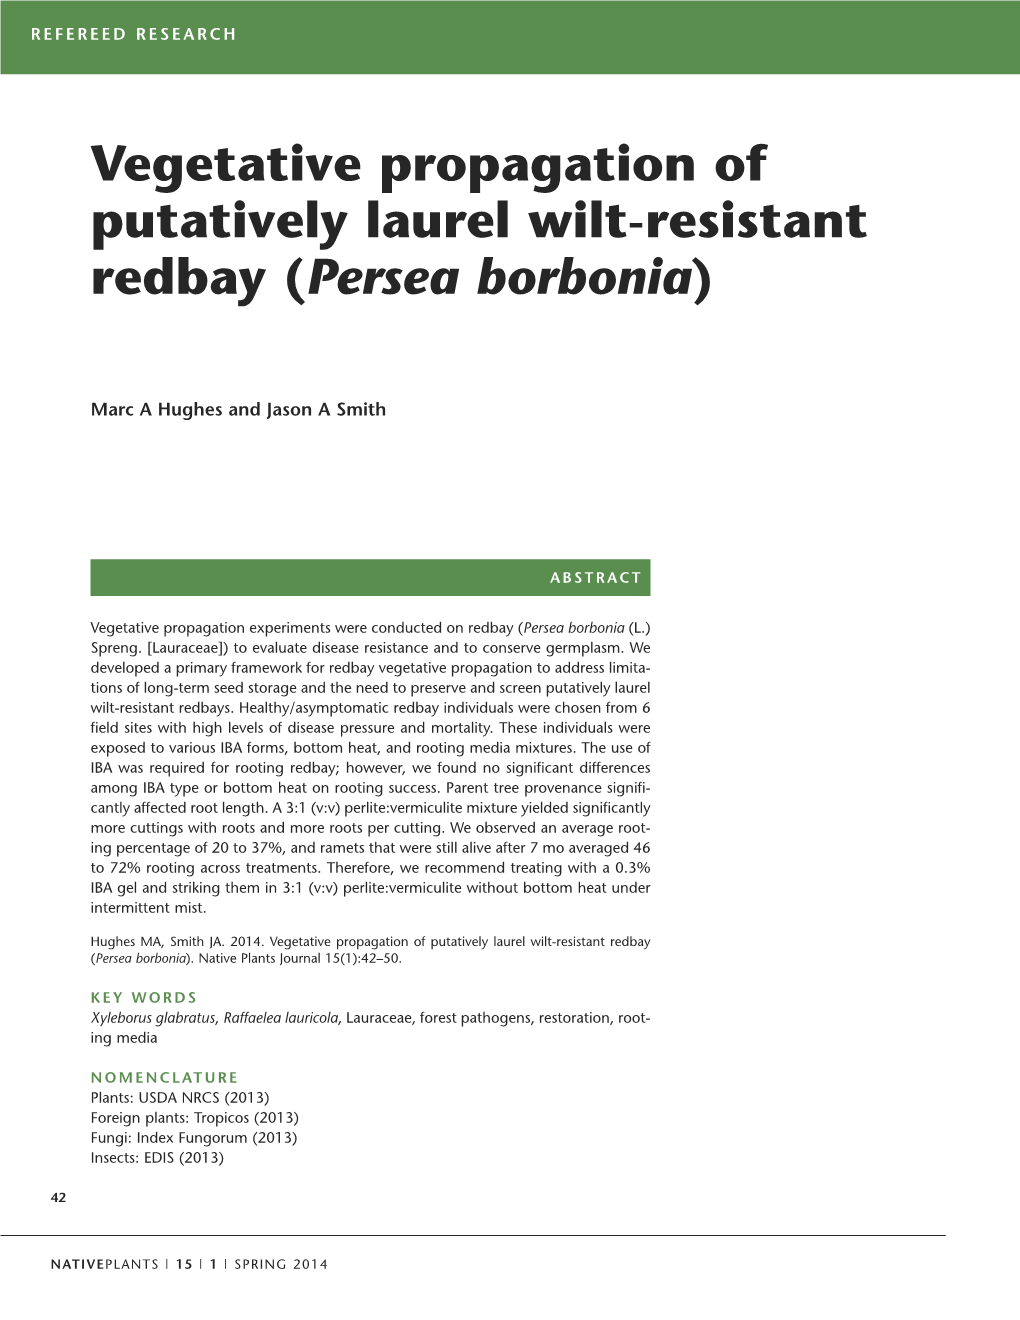 Vegetative Propagation of Putatively Laurel Wilt-Resistant Redbay ( Persea Borbonia )